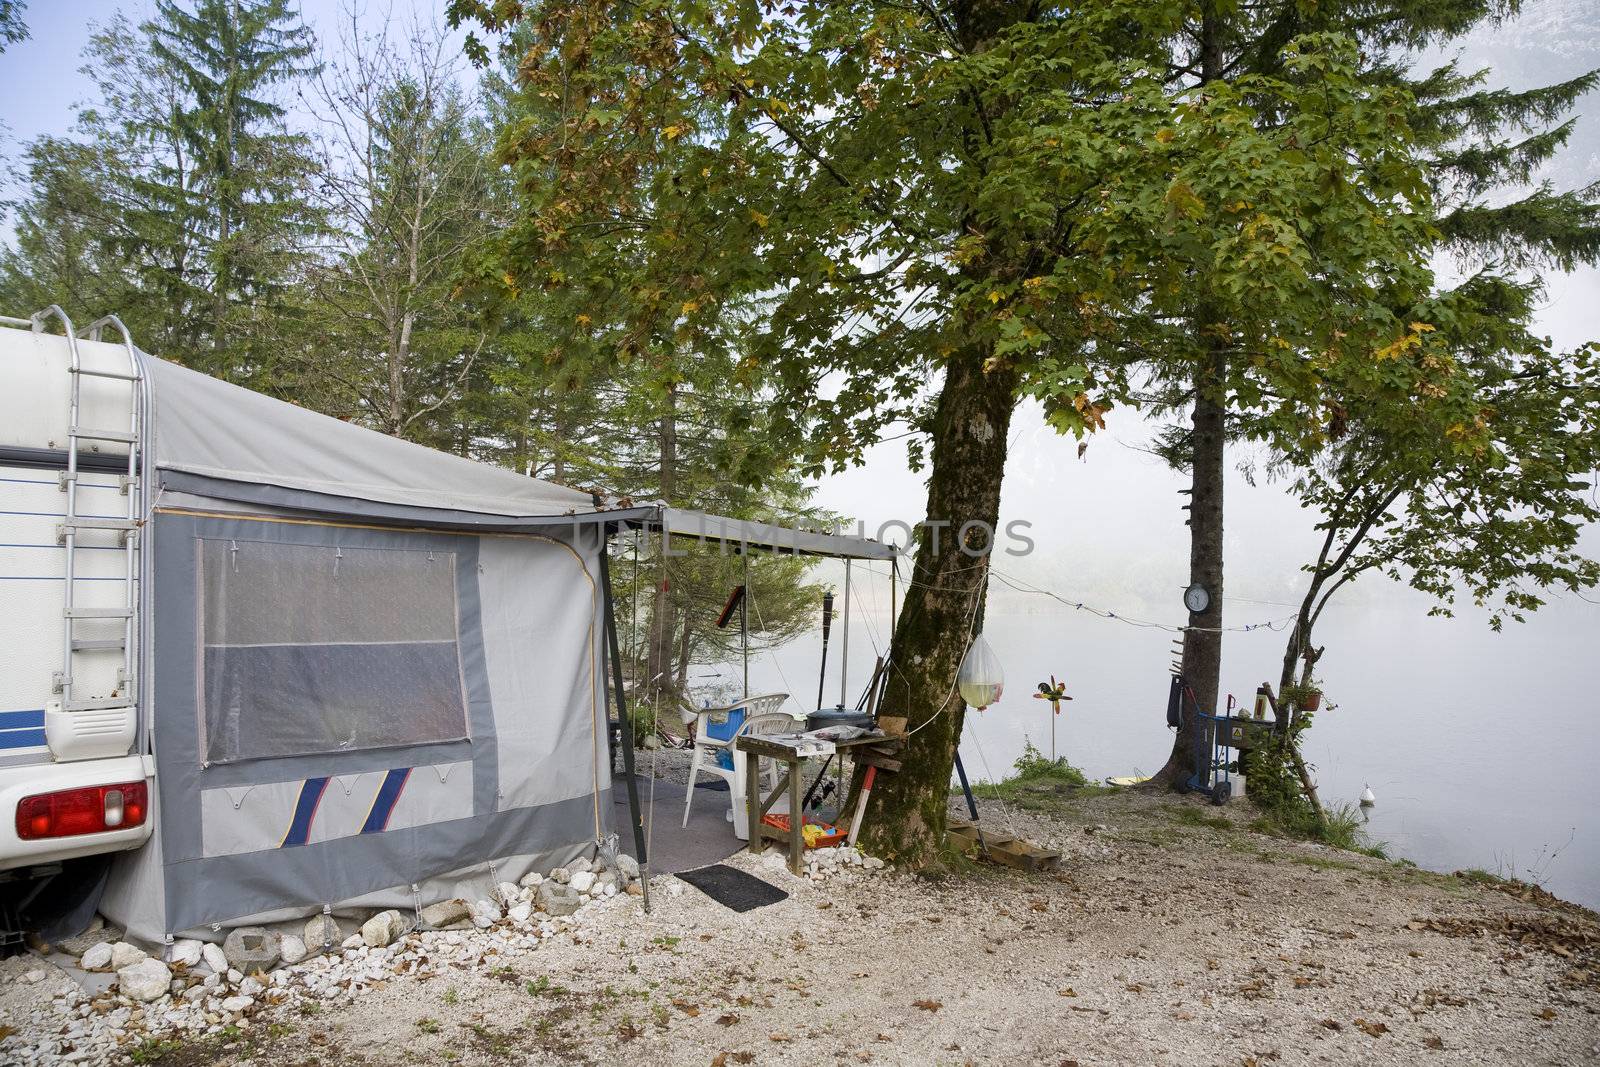 Camping by Lake Bohinj by ABCDK